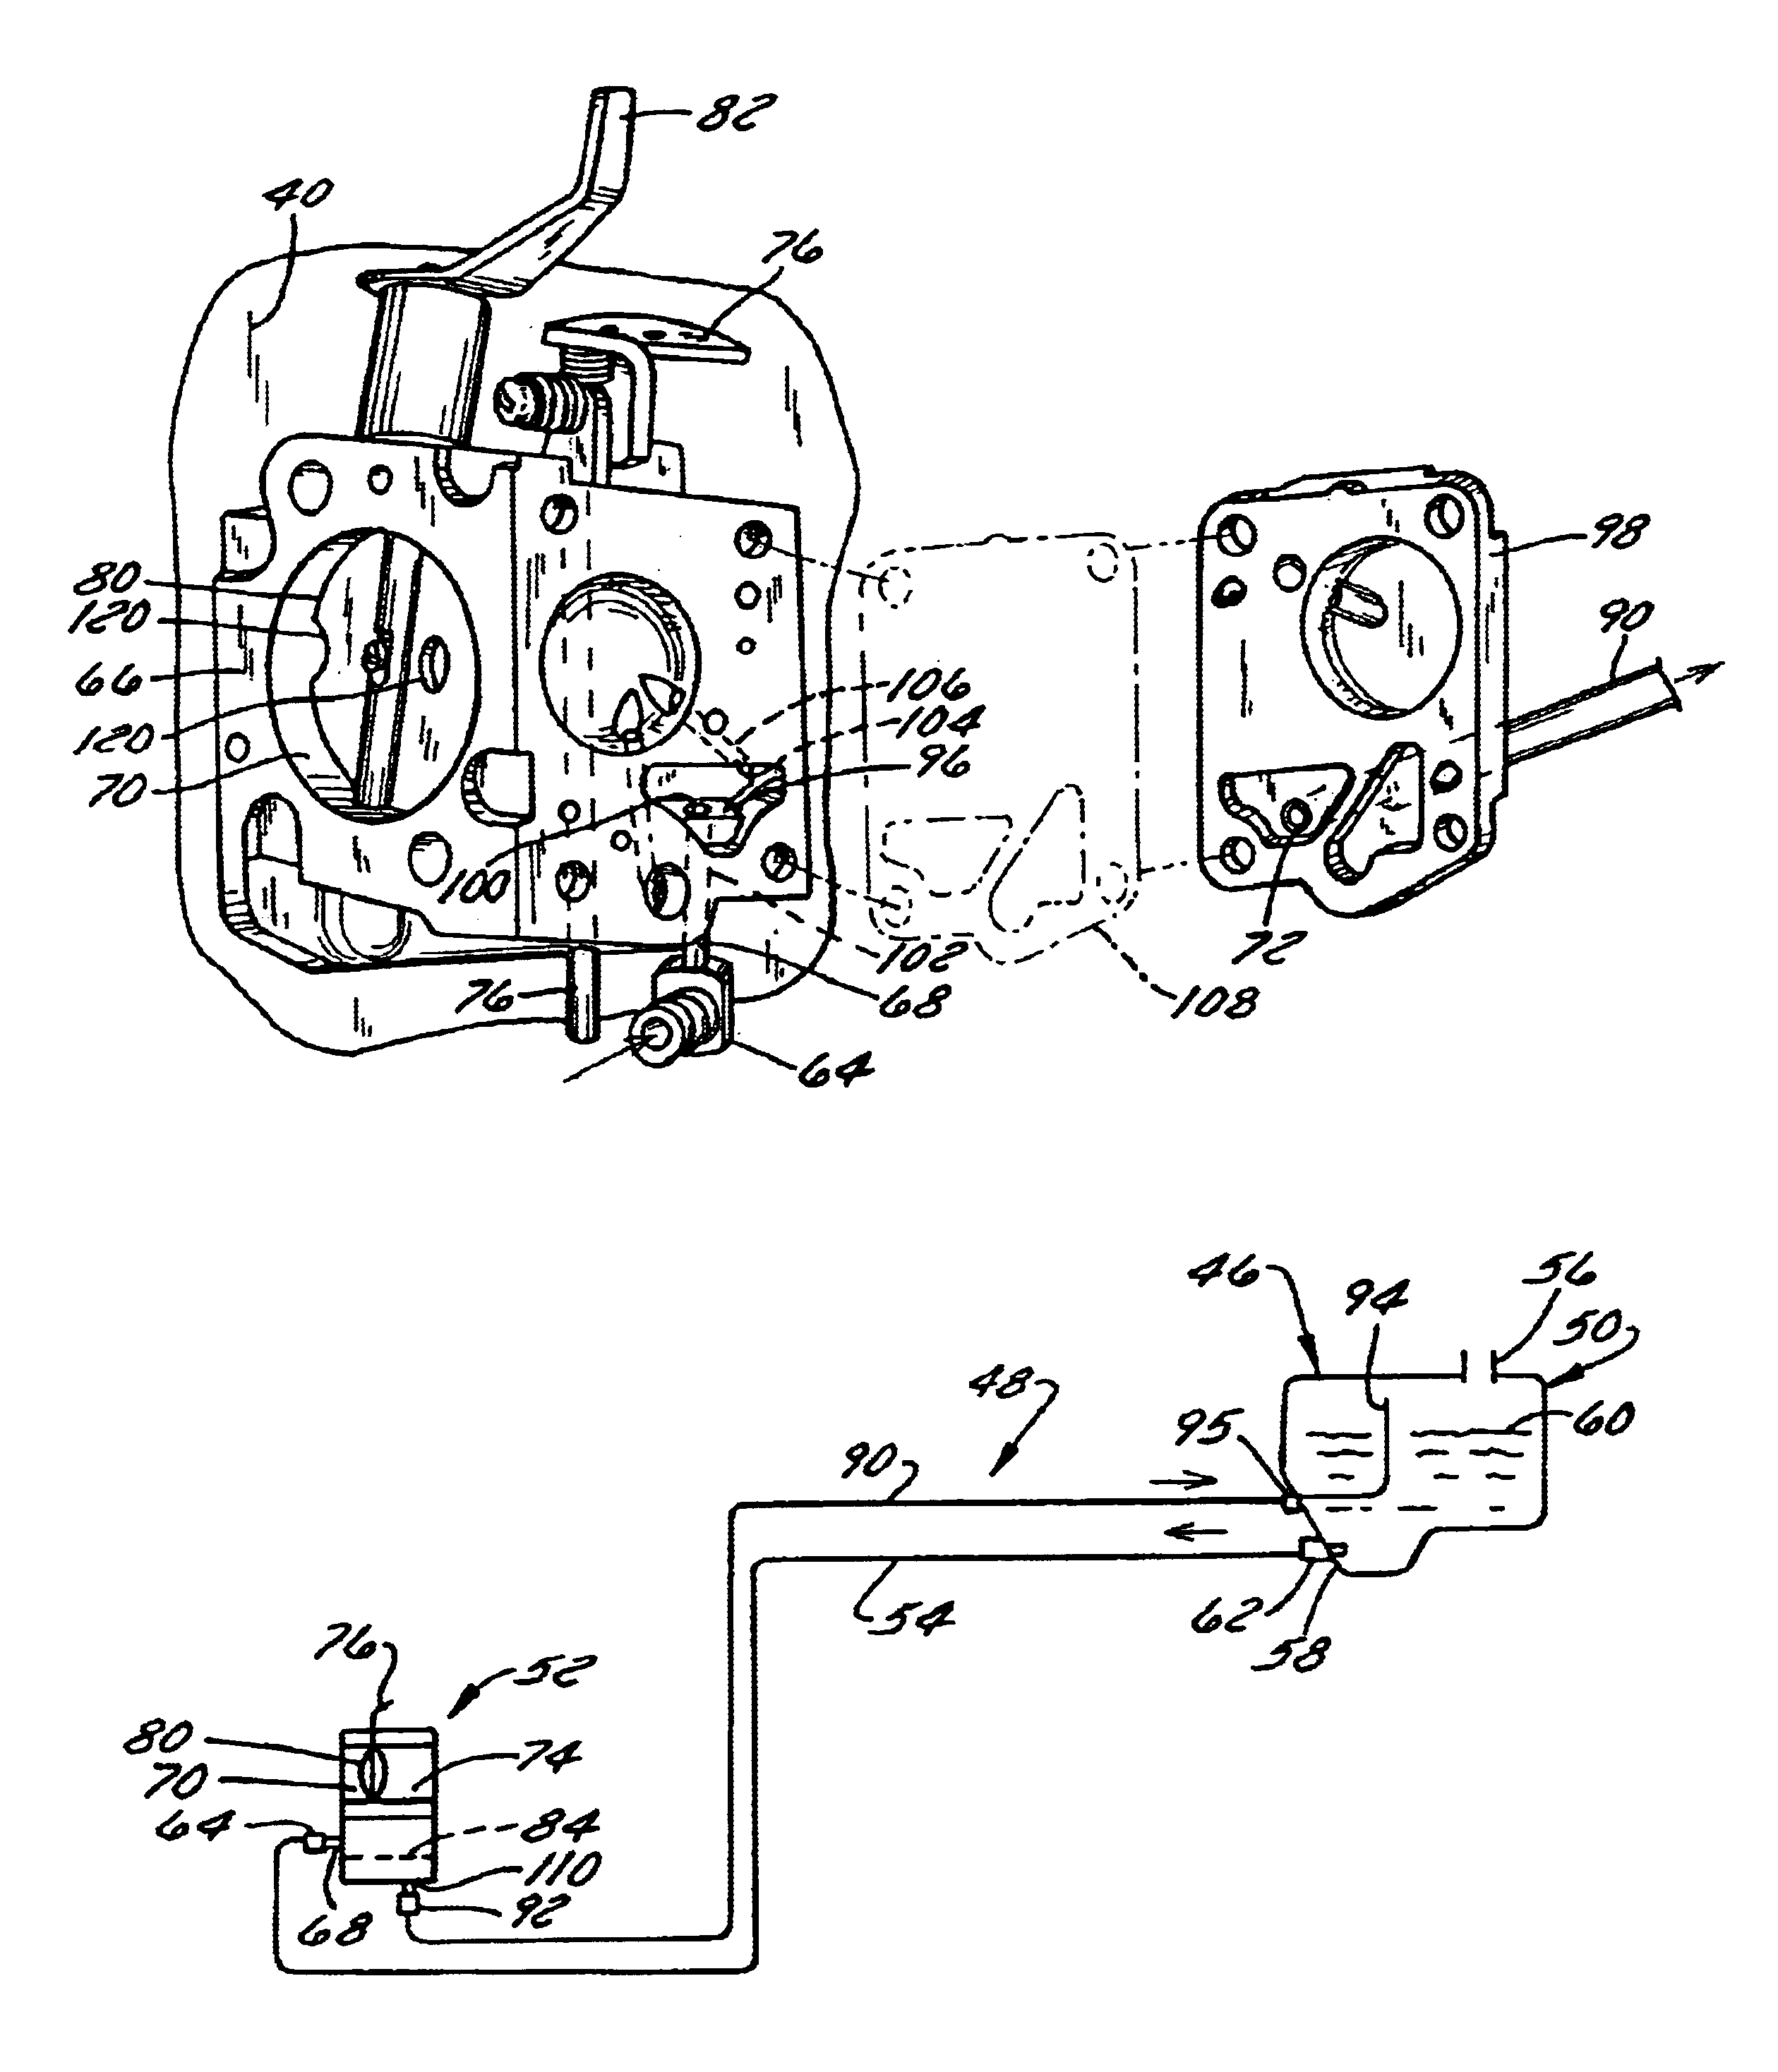 Diaphragm carburetor with air purge system